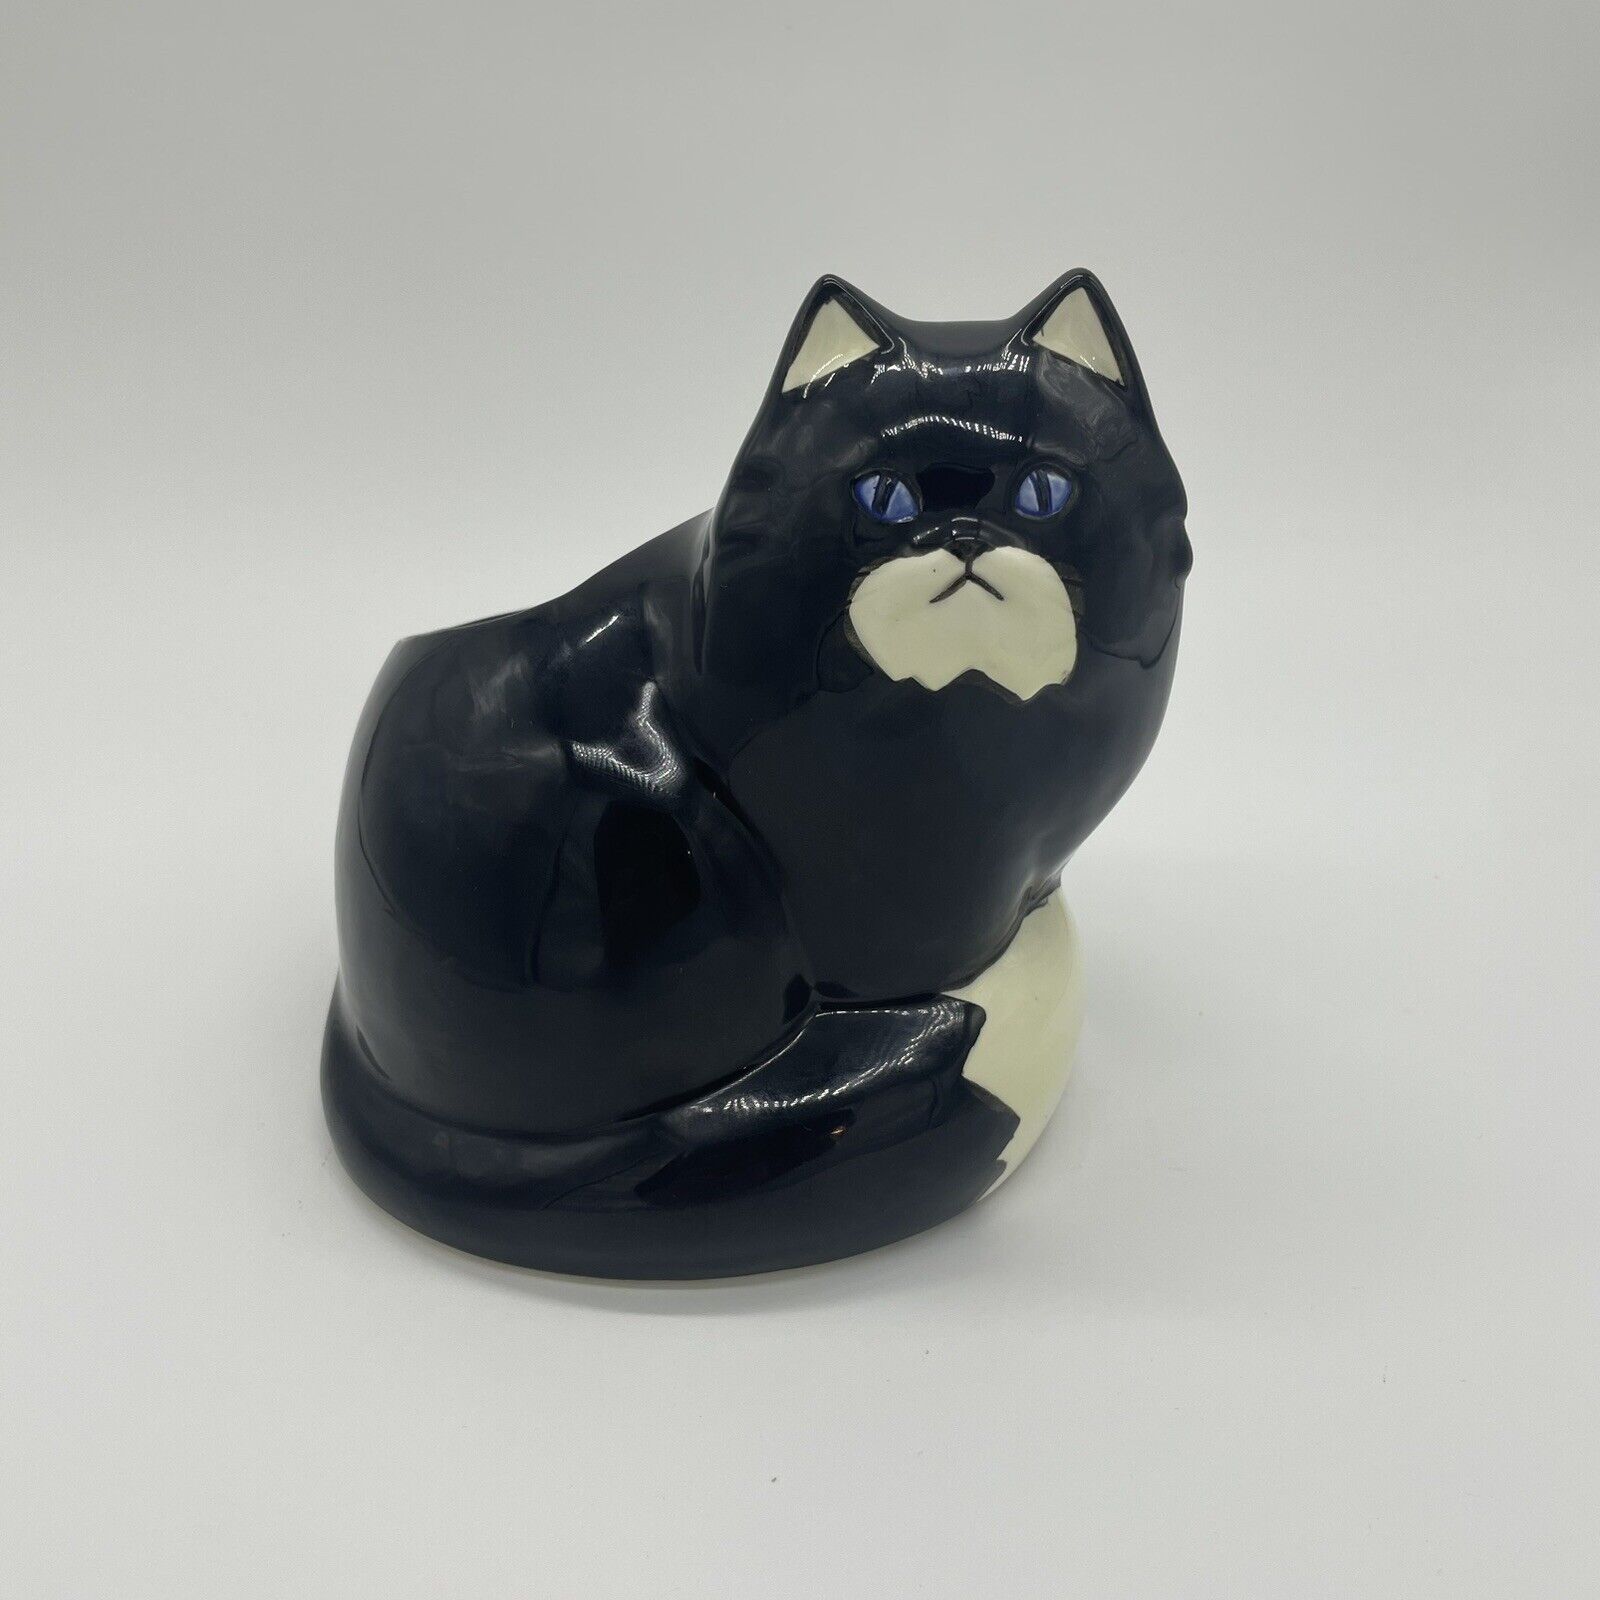 Vintage Takahashi Ceramic Black White Cat Planter Vase Calico Blue Eyes Japan